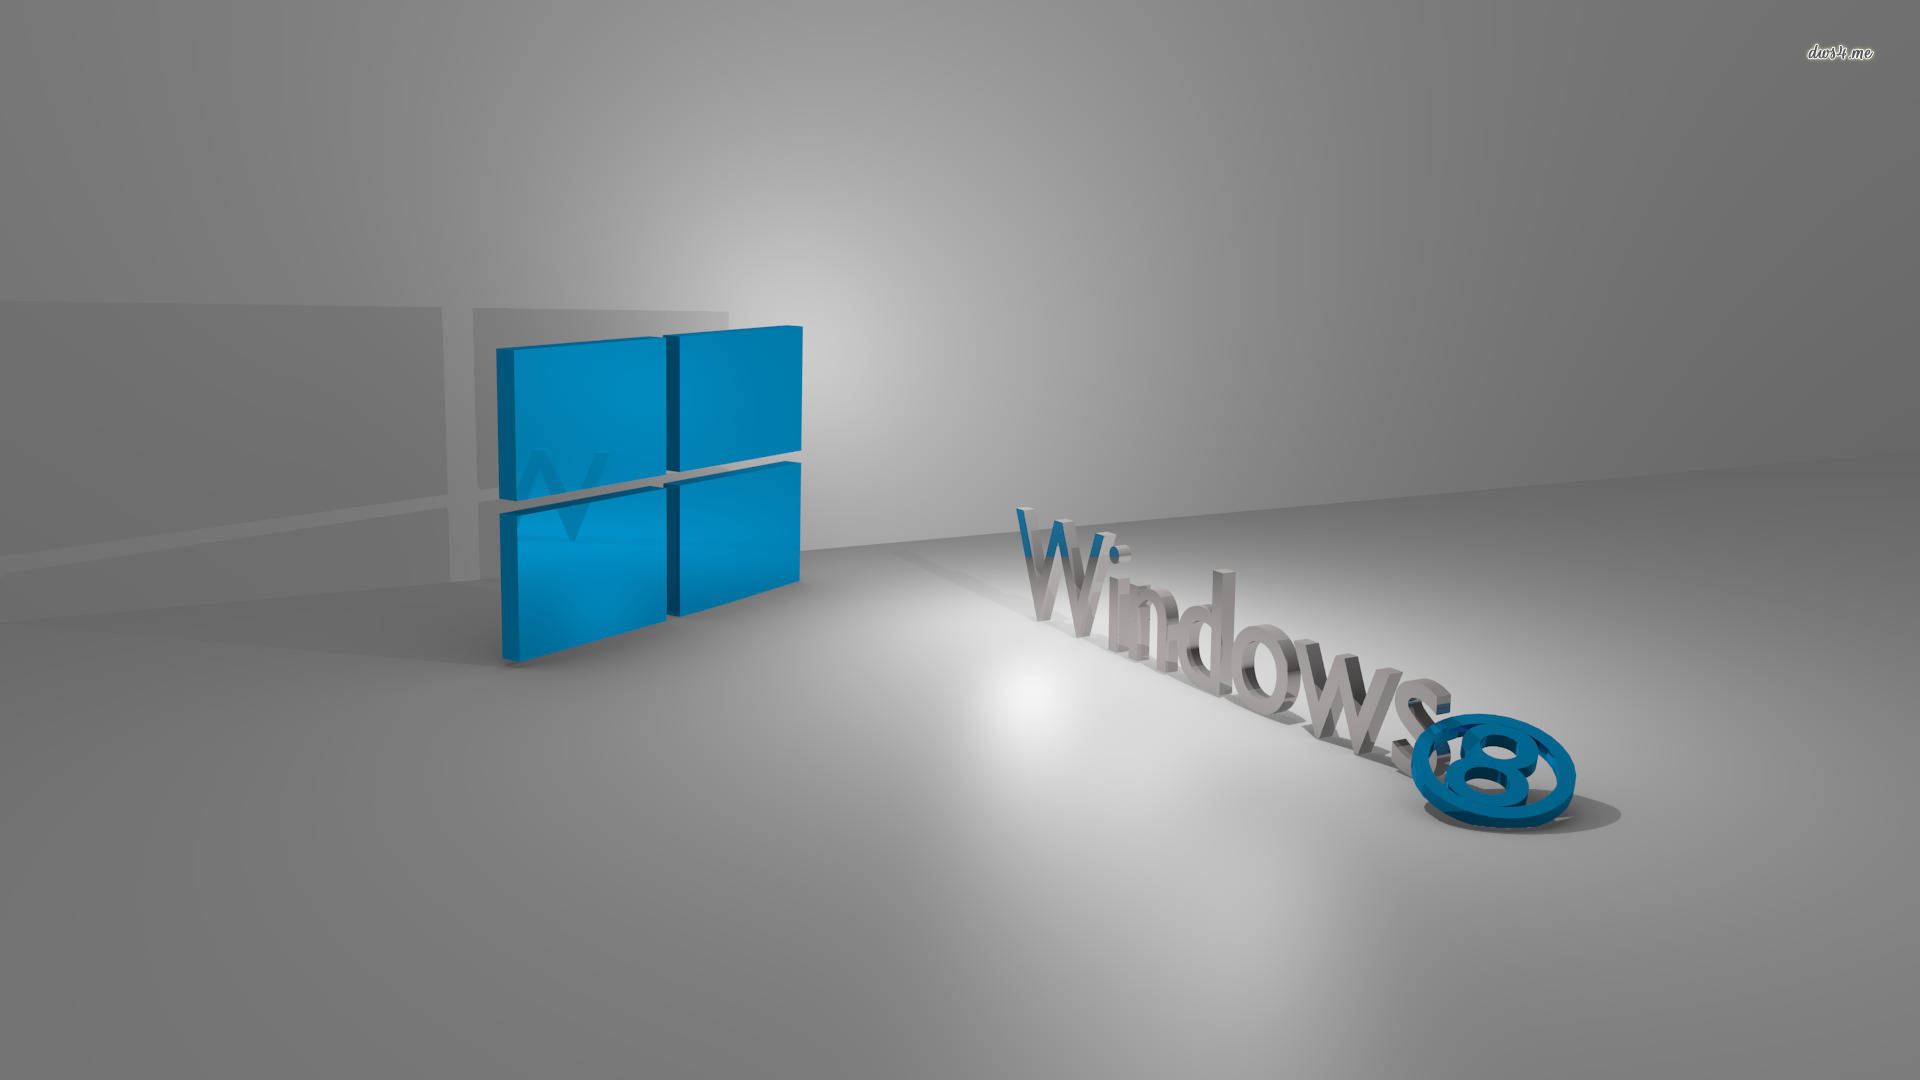 3D Windows 8 Logo And Wordmark Wallpaper